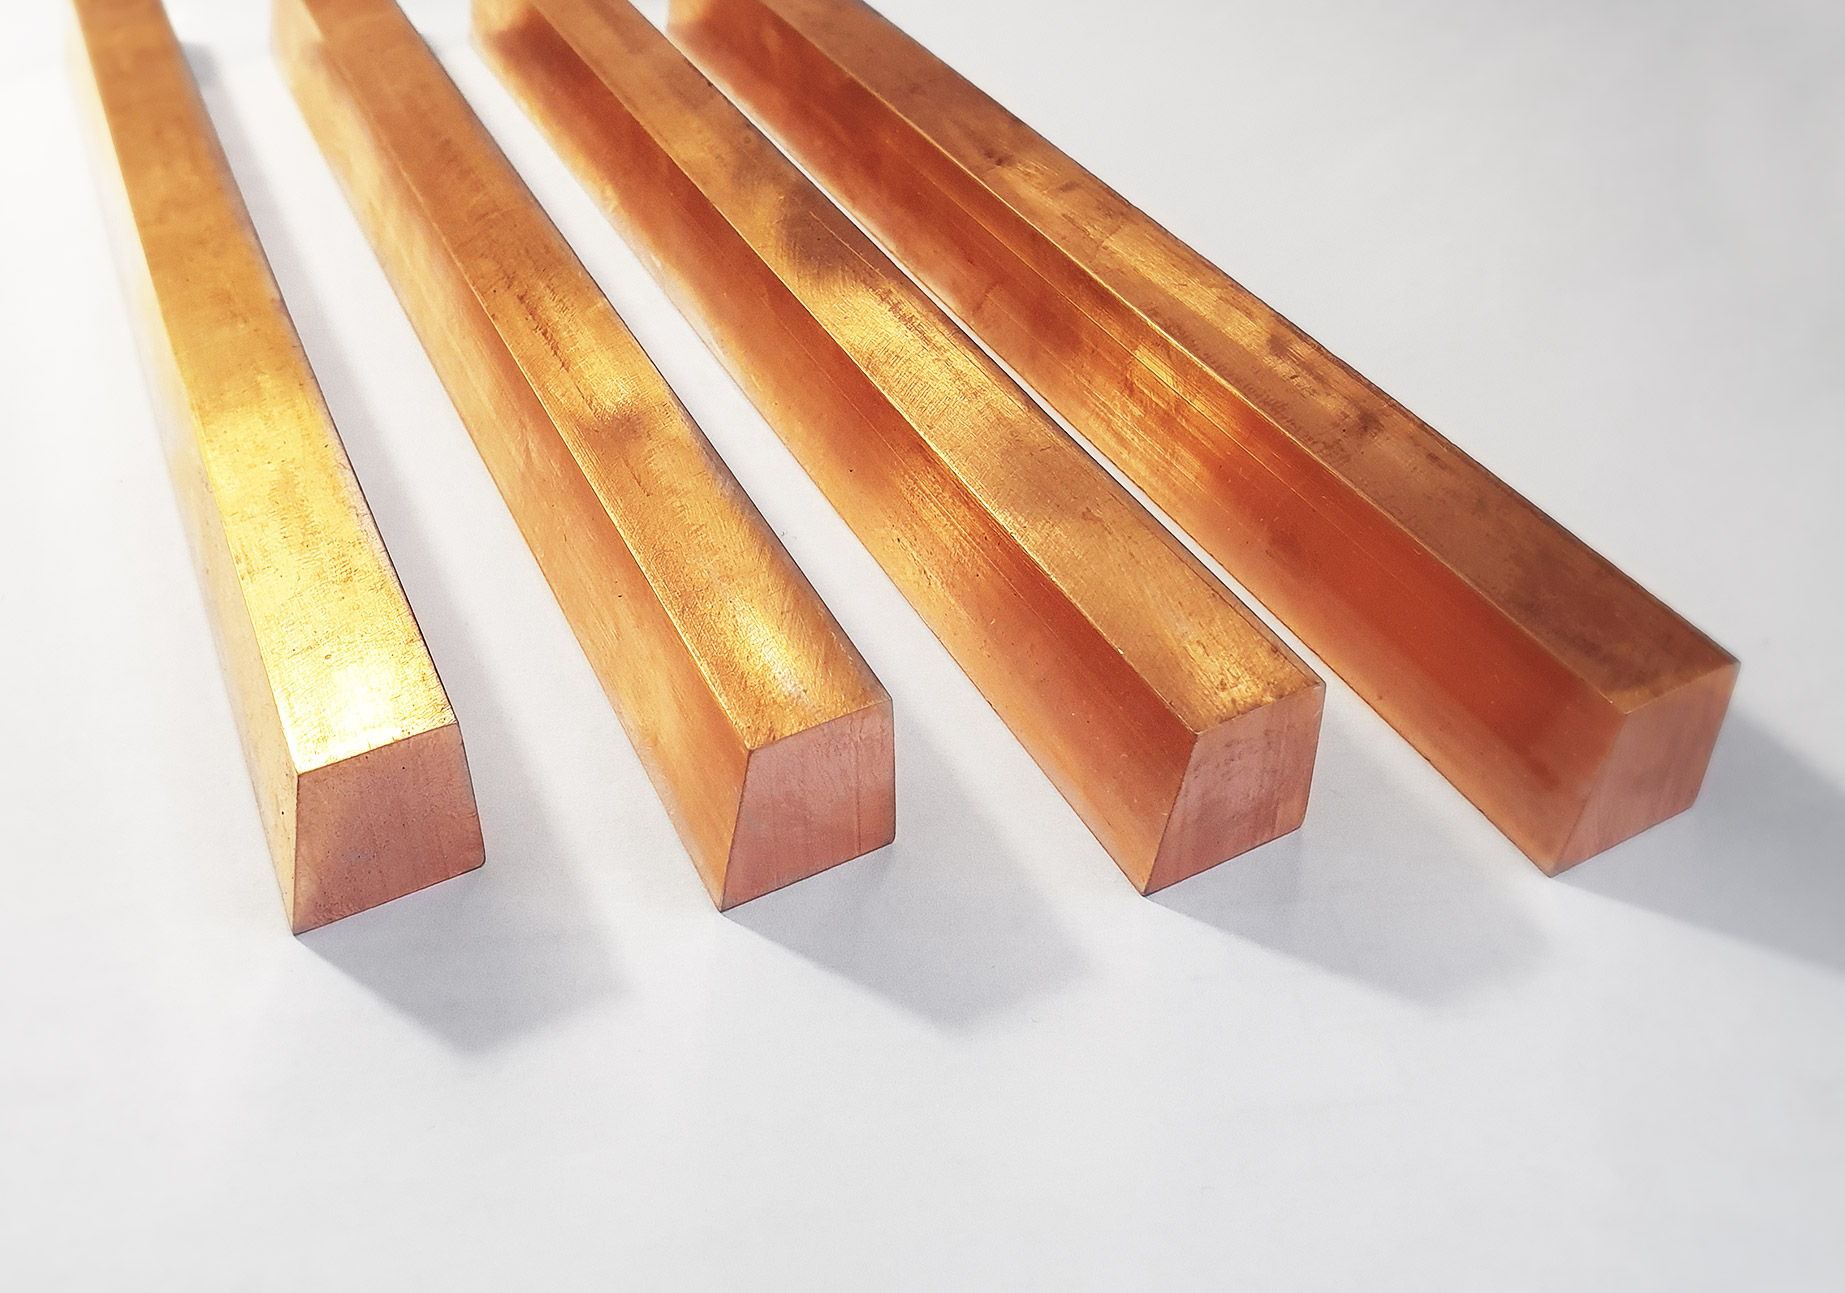 Copper electrodes for resistance welding